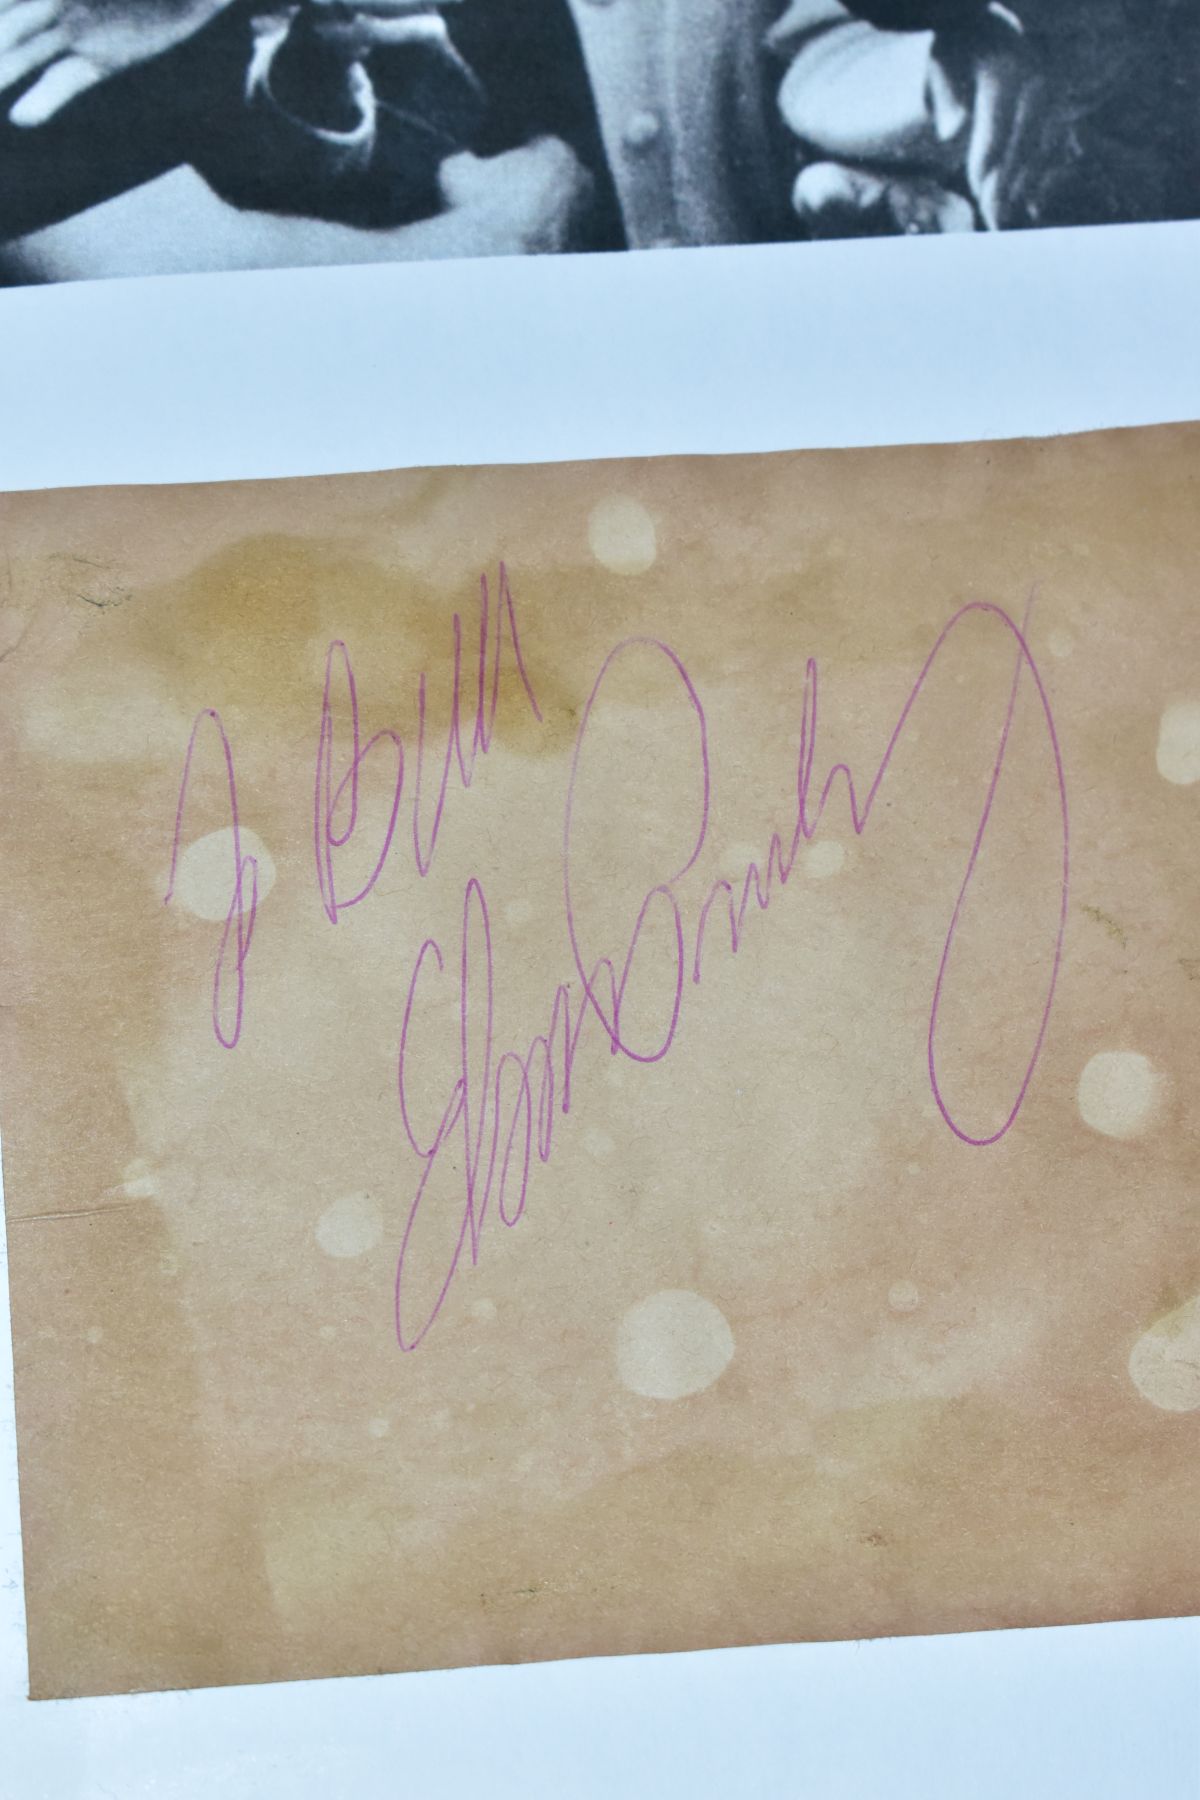 ELVIS PRESLEY AUTOGRAPH, an Elvis Presley Signature signed 'Best Wishes Elvis Presley' in red ink on - Image 2 of 3